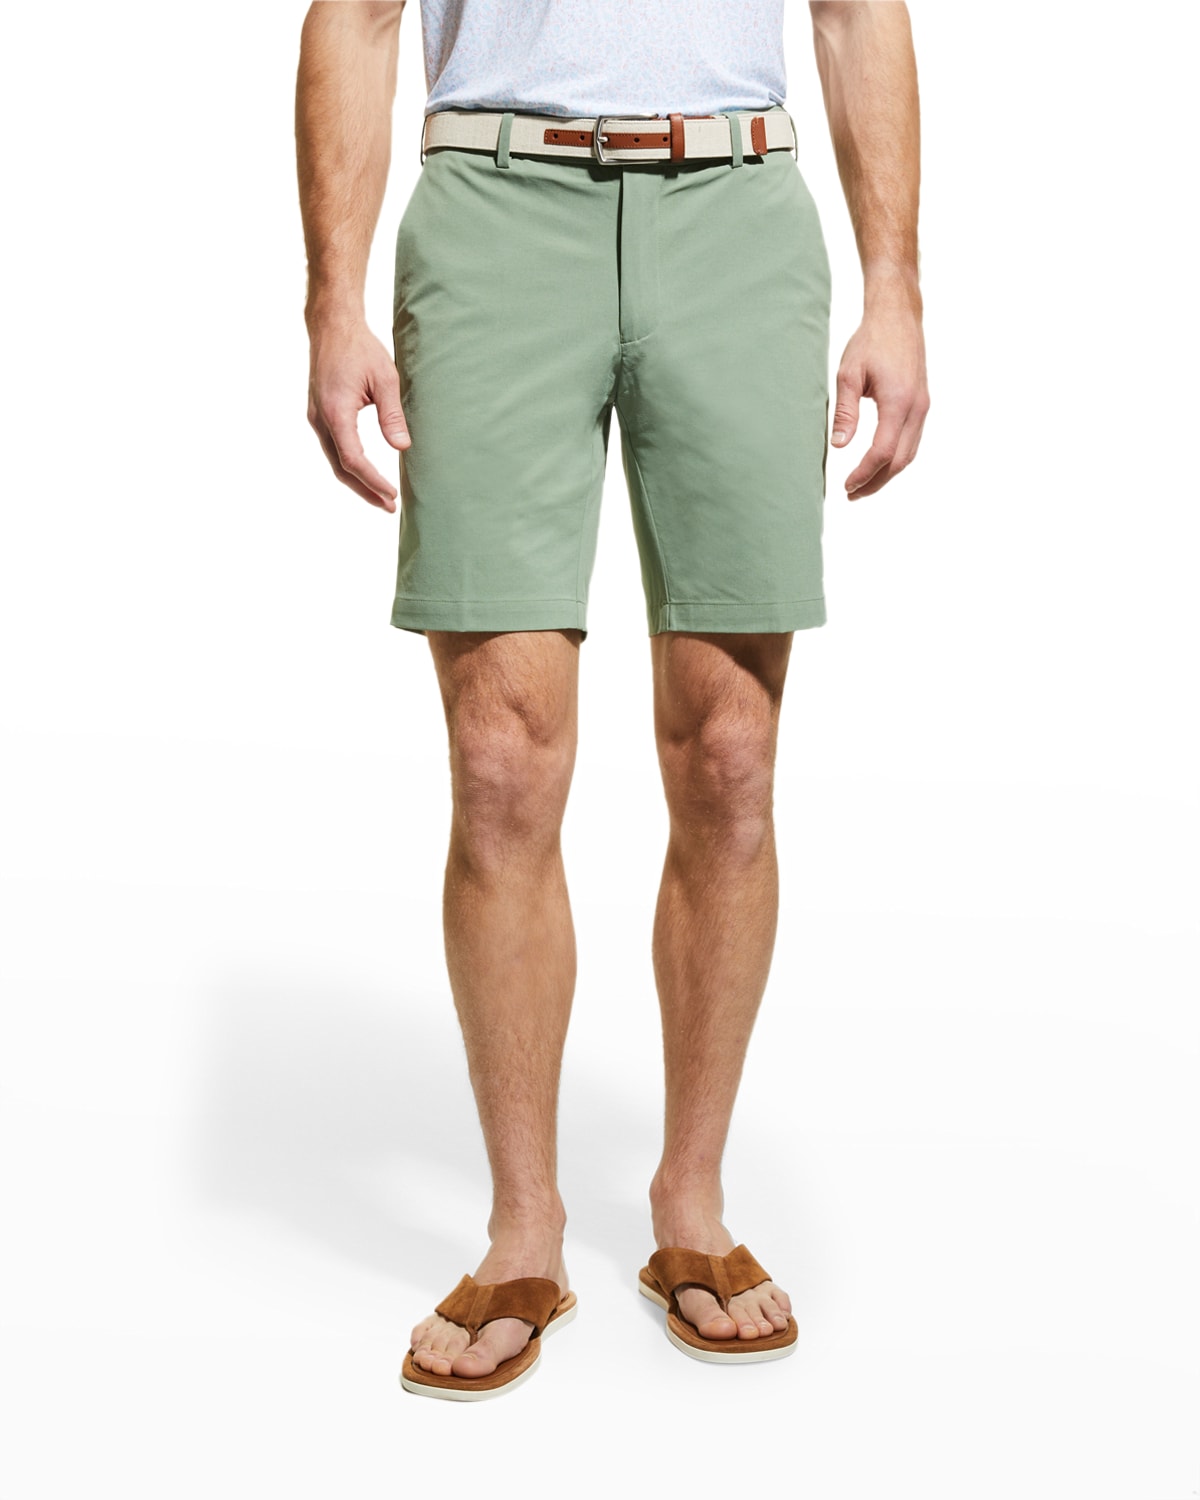 Peter Millar Men's Surge Performance Wrinkle-Resistant Shorts